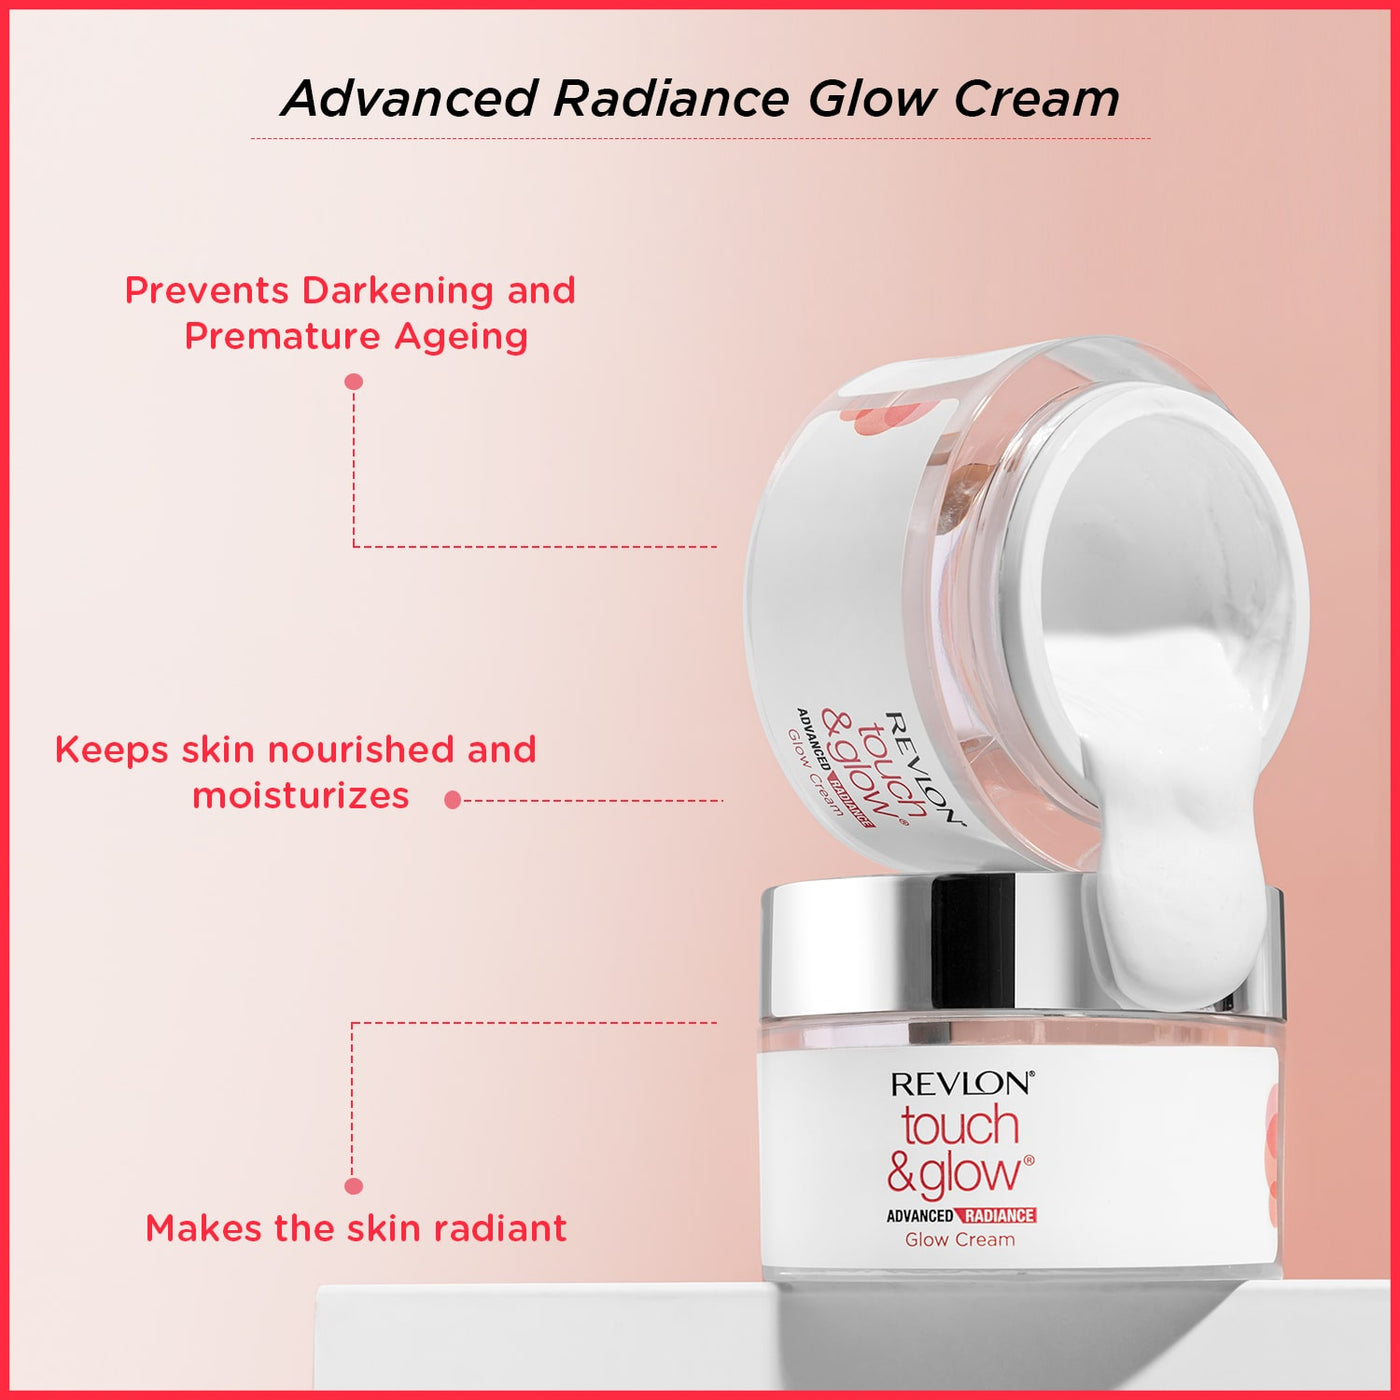 Revlon Touch & Glow Advanced Radiance Face Glow Cream